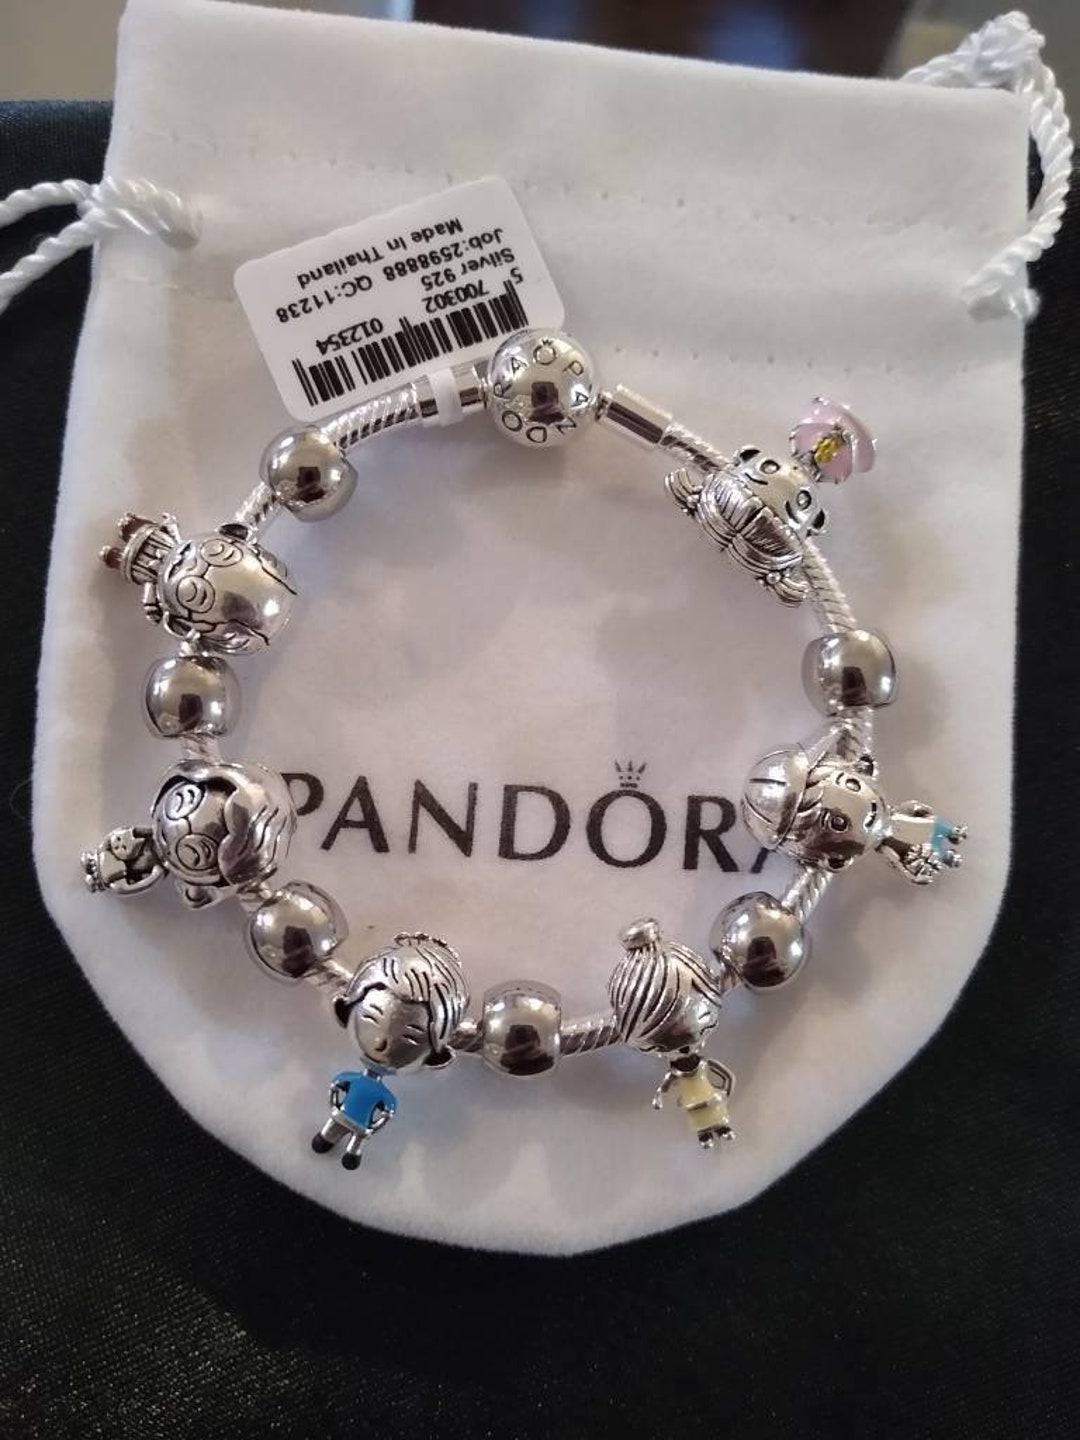 Pandora Bracelet With Family Member Charms - Etsy